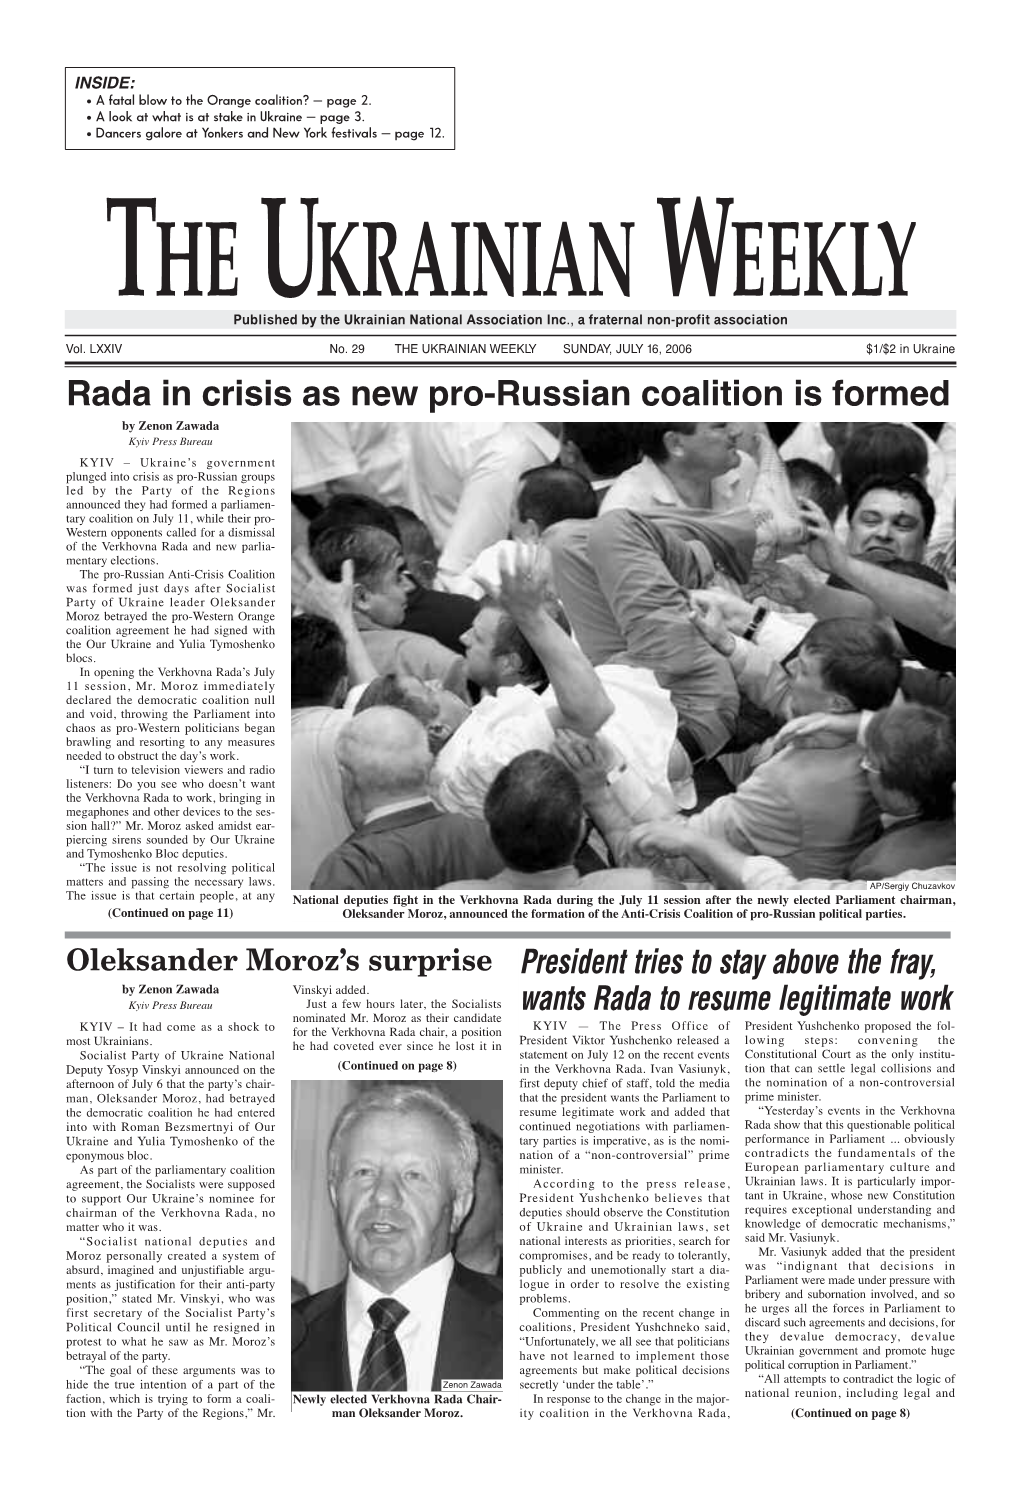 The Ukrainian Weekly 2006, No.29